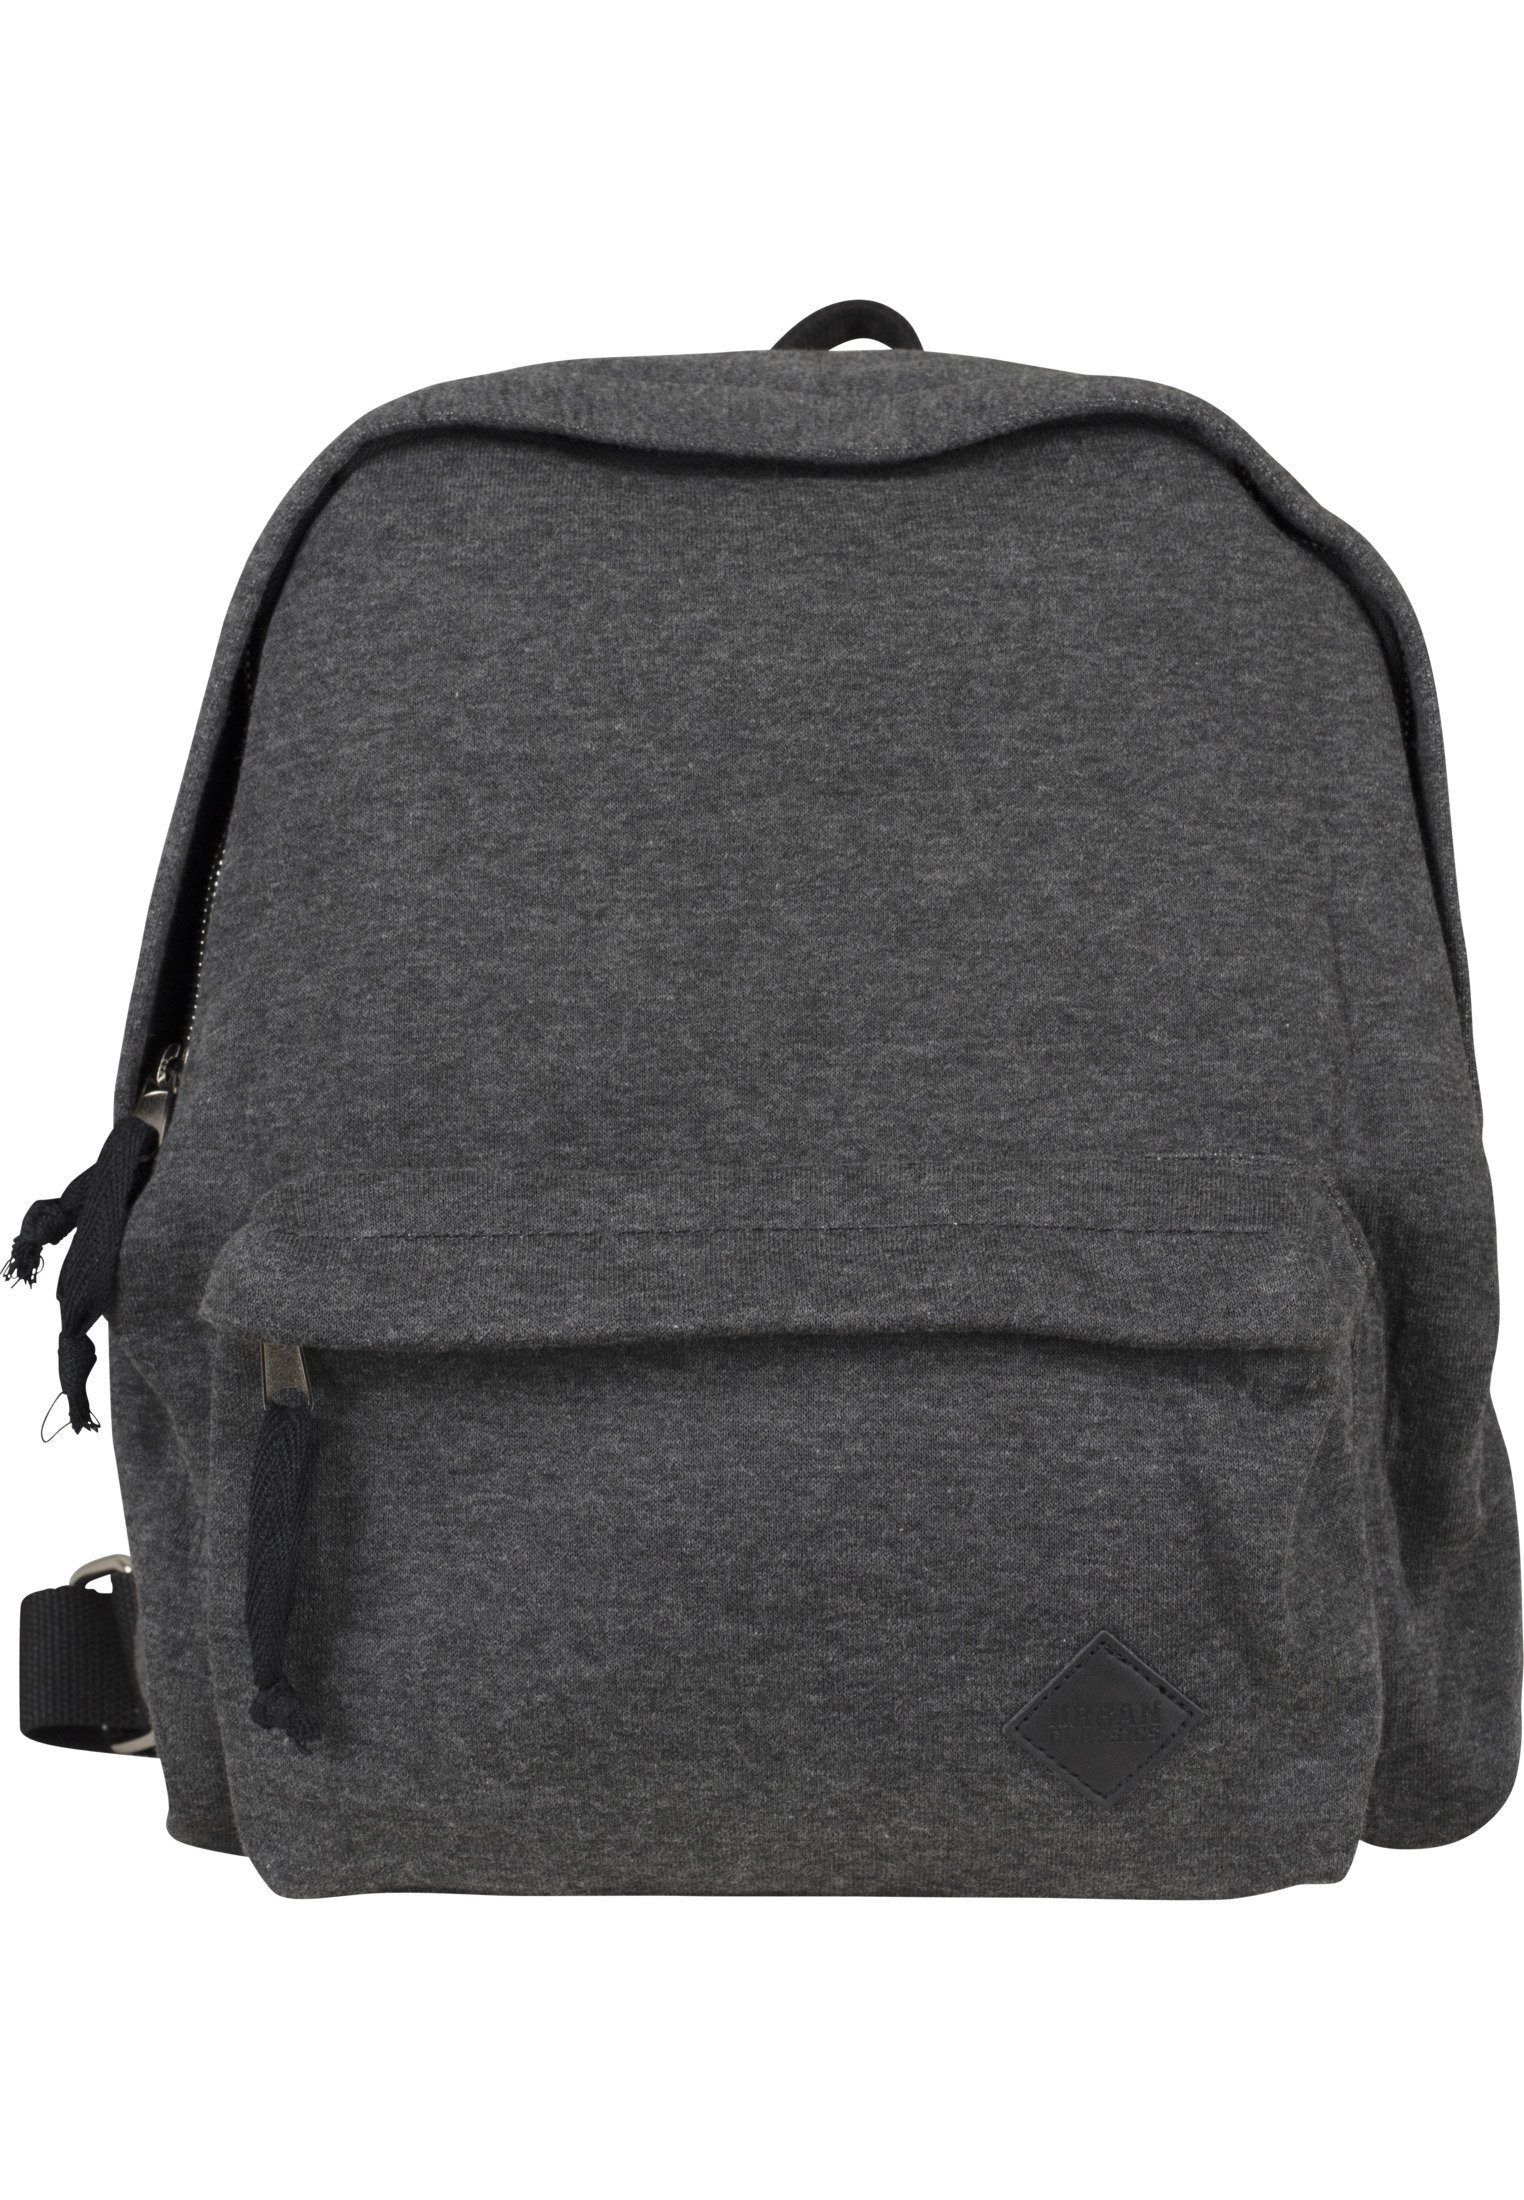 Rucksack Unisex URBAN Backpack Sweat charcoal/black CLASSICS